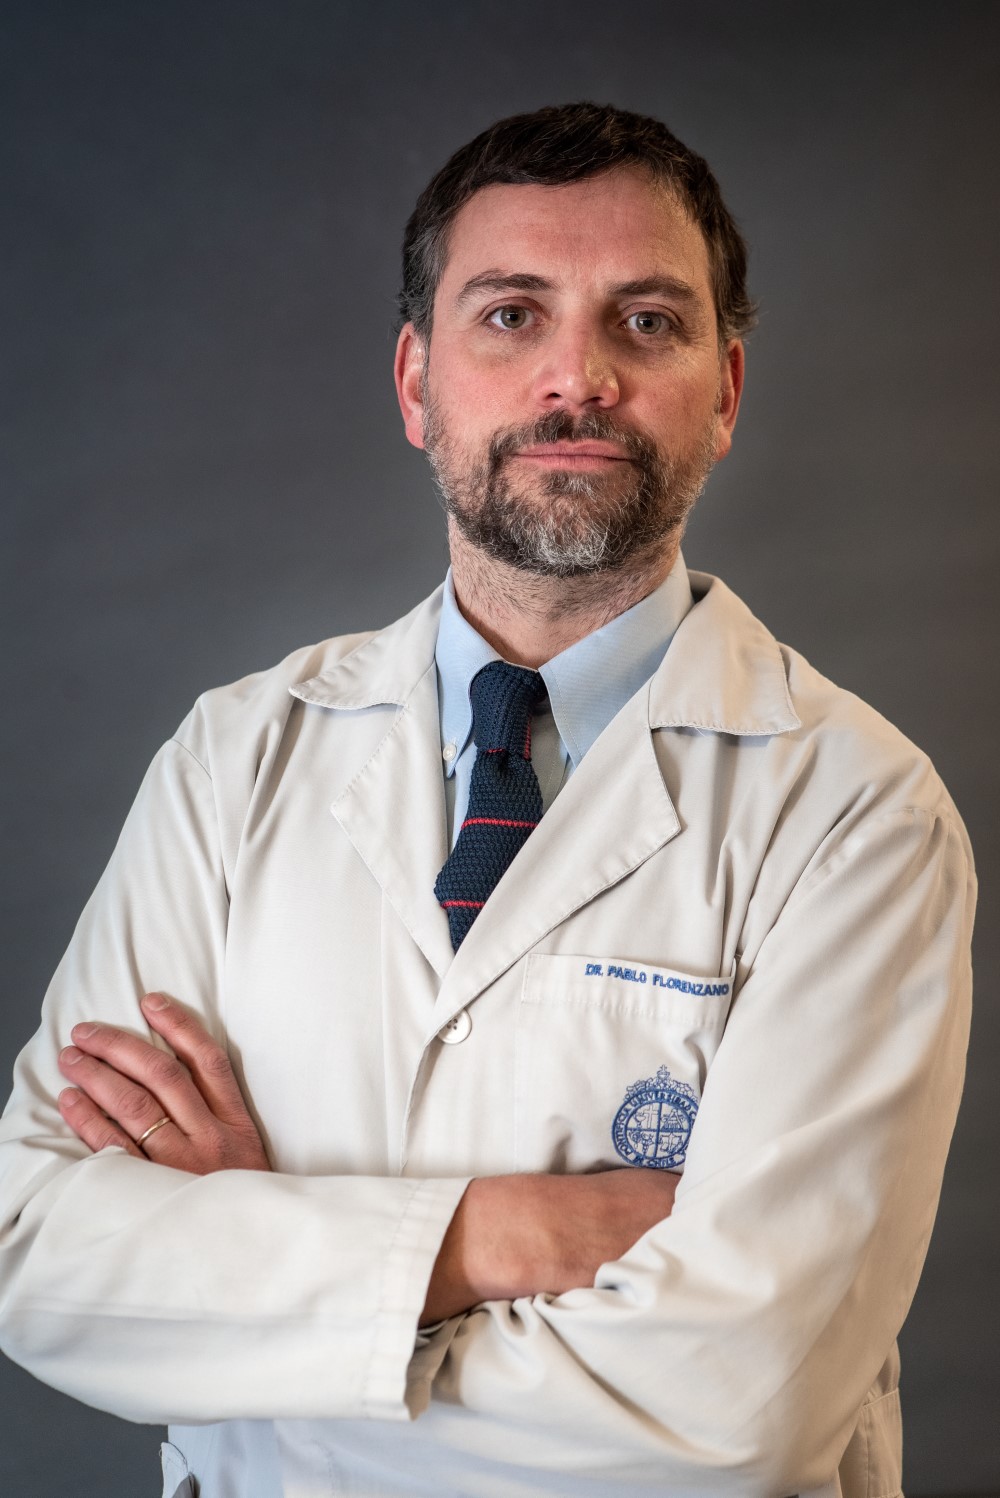 Dr. Pablo Florenzano V.